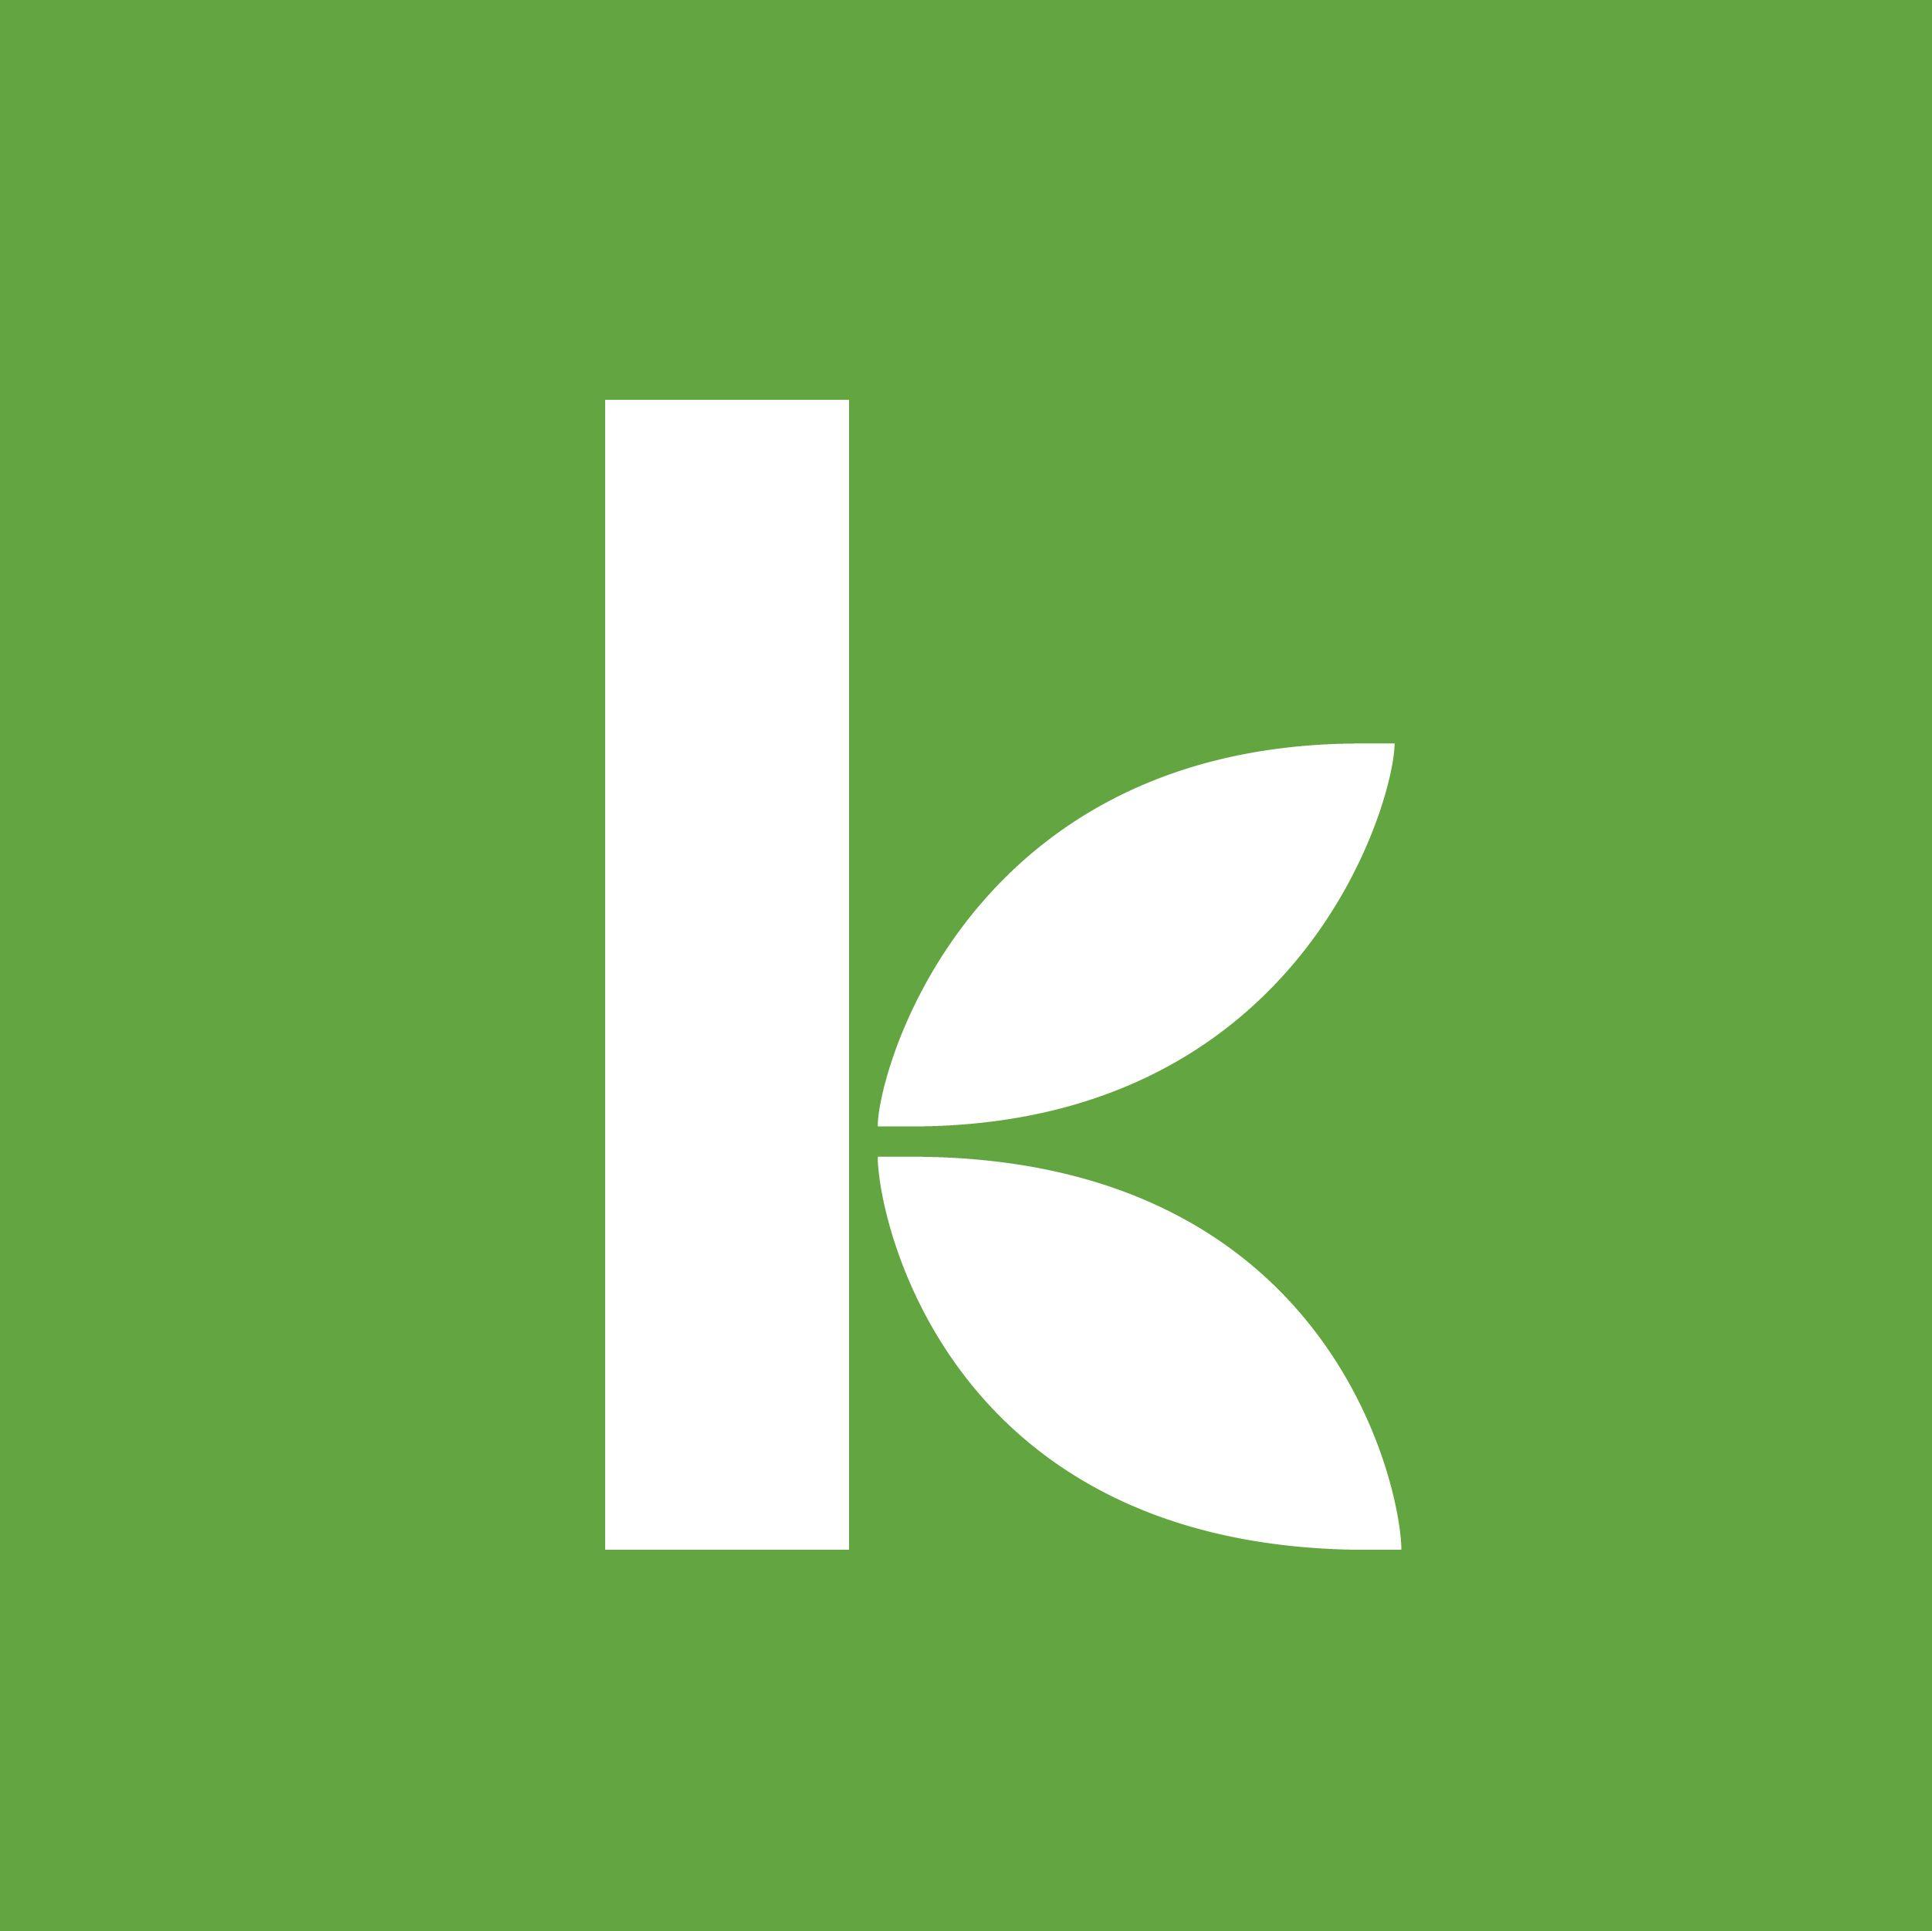 Kiva Logo - About | Kiva